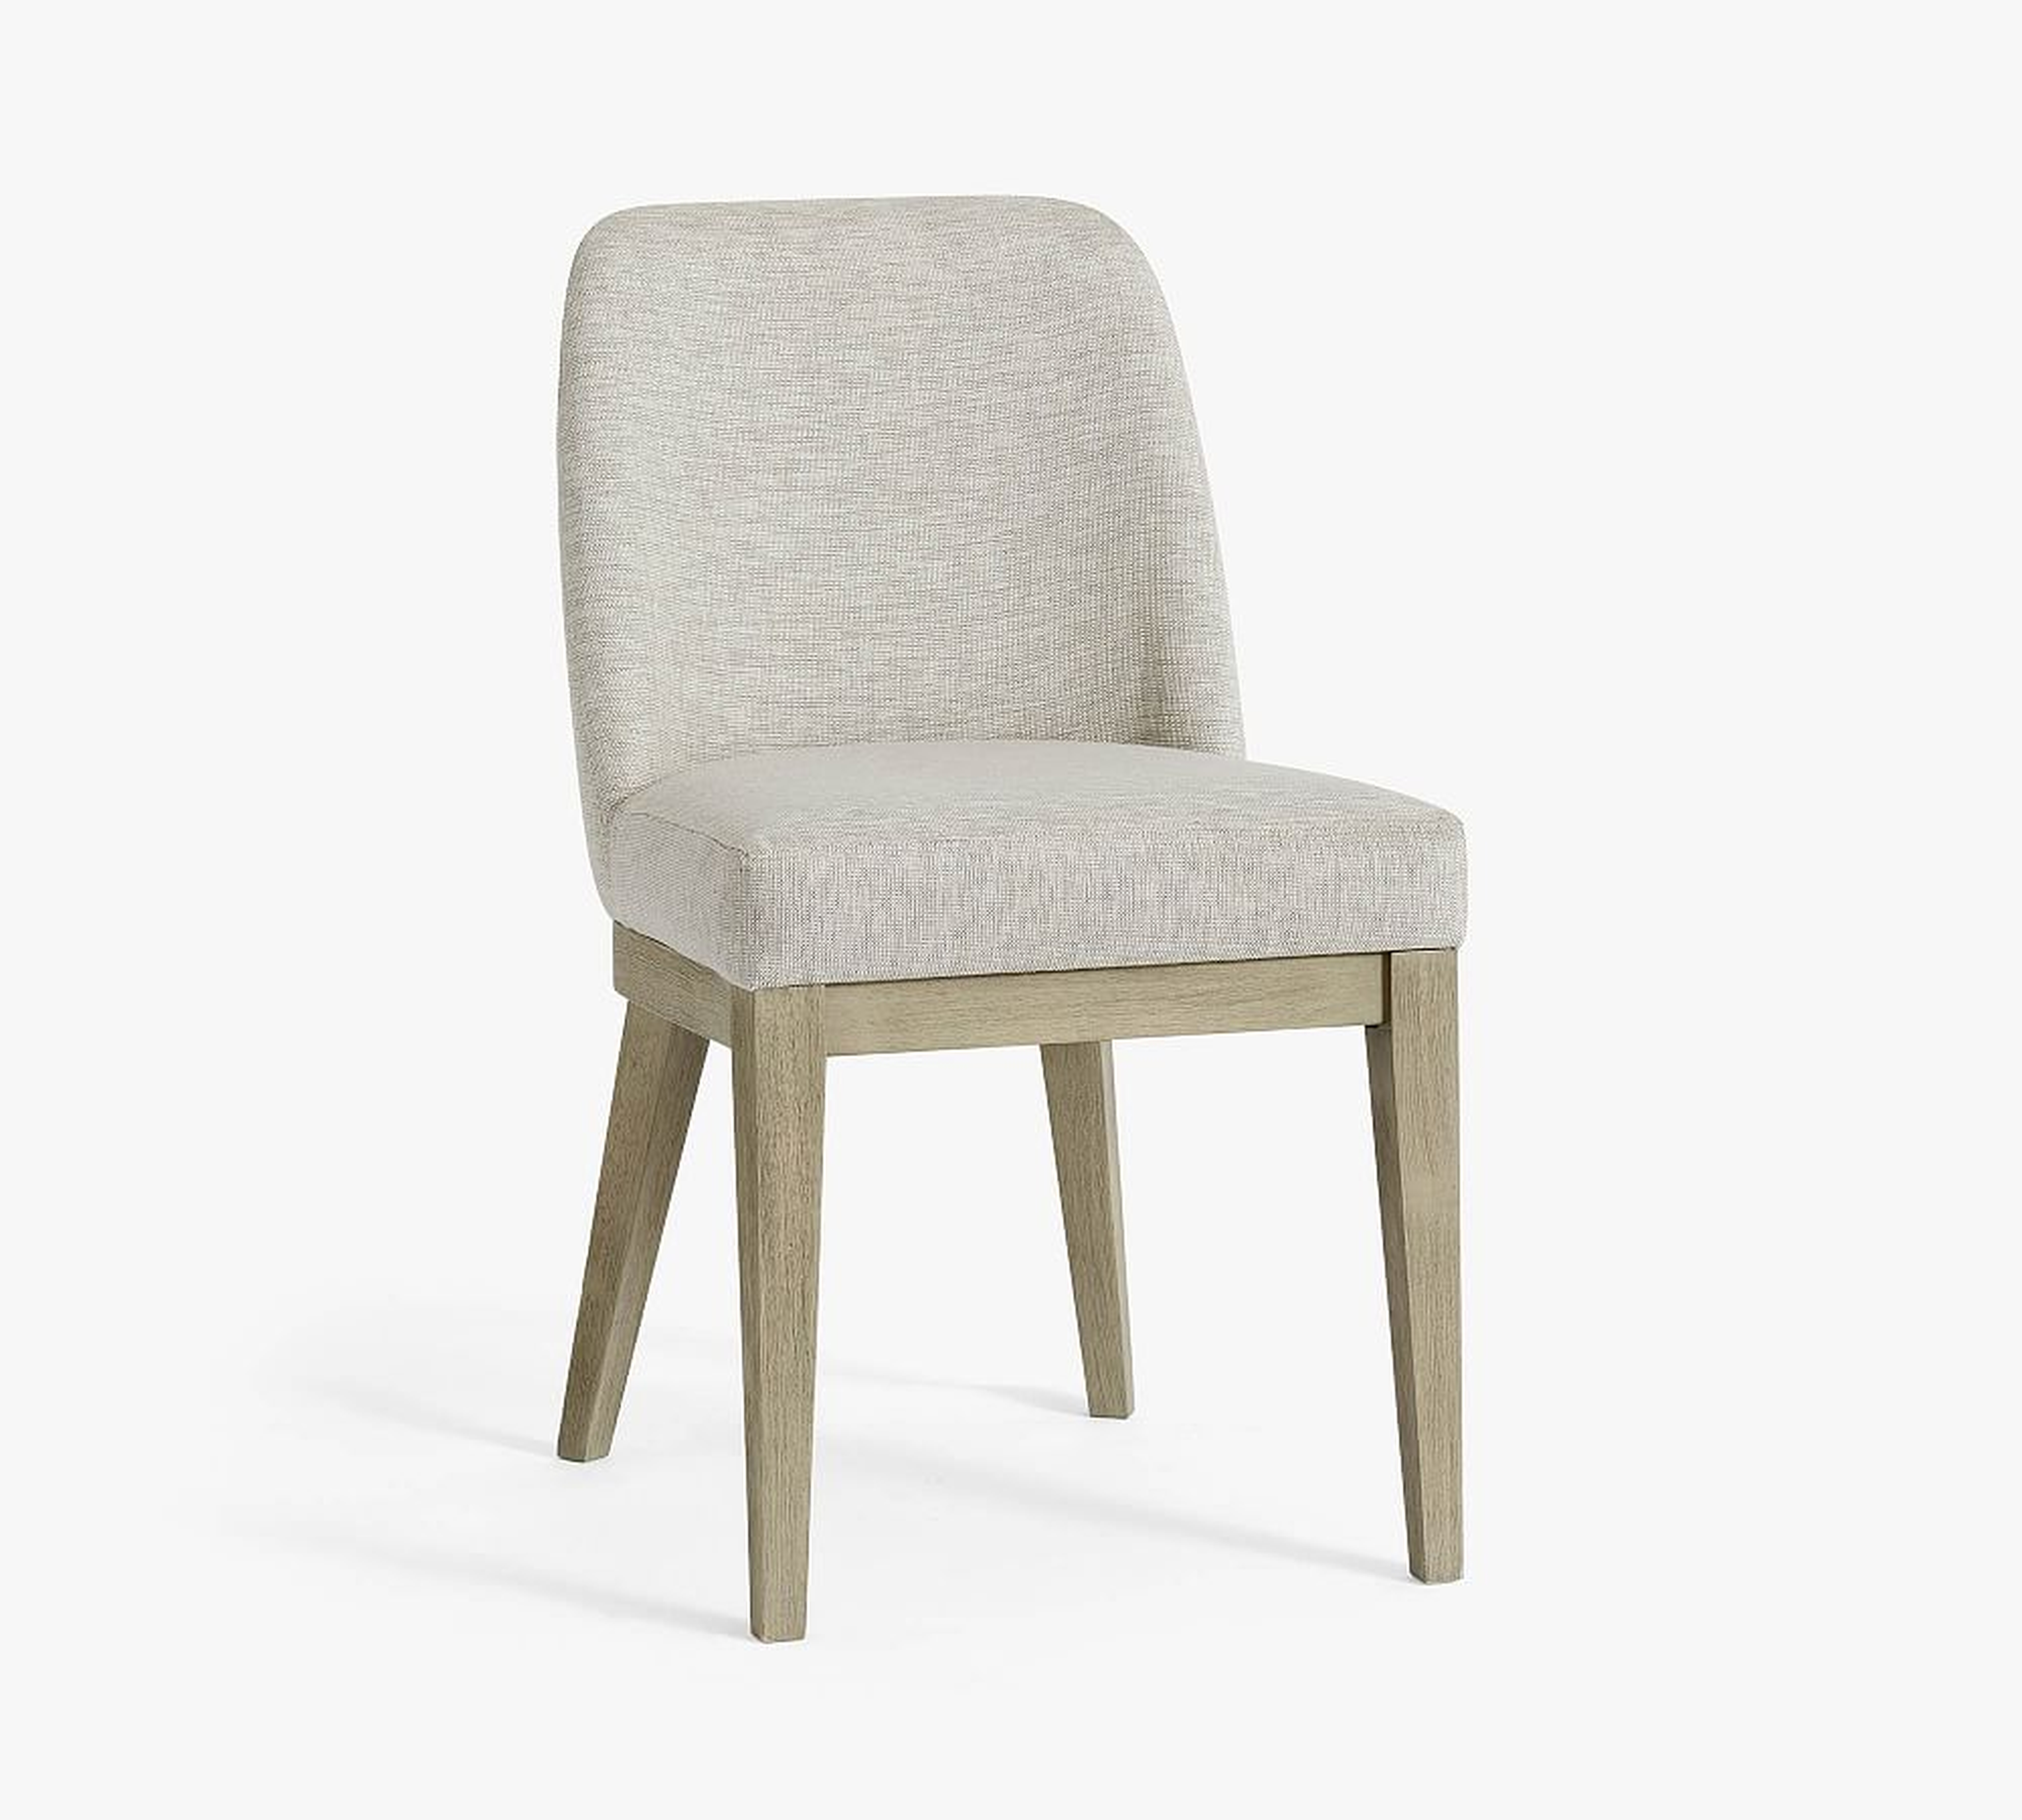 Layton Upholstered Dining Side Chair, Gray Wash Legs, Basketweave Slub Oatmeal - Pottery Barn